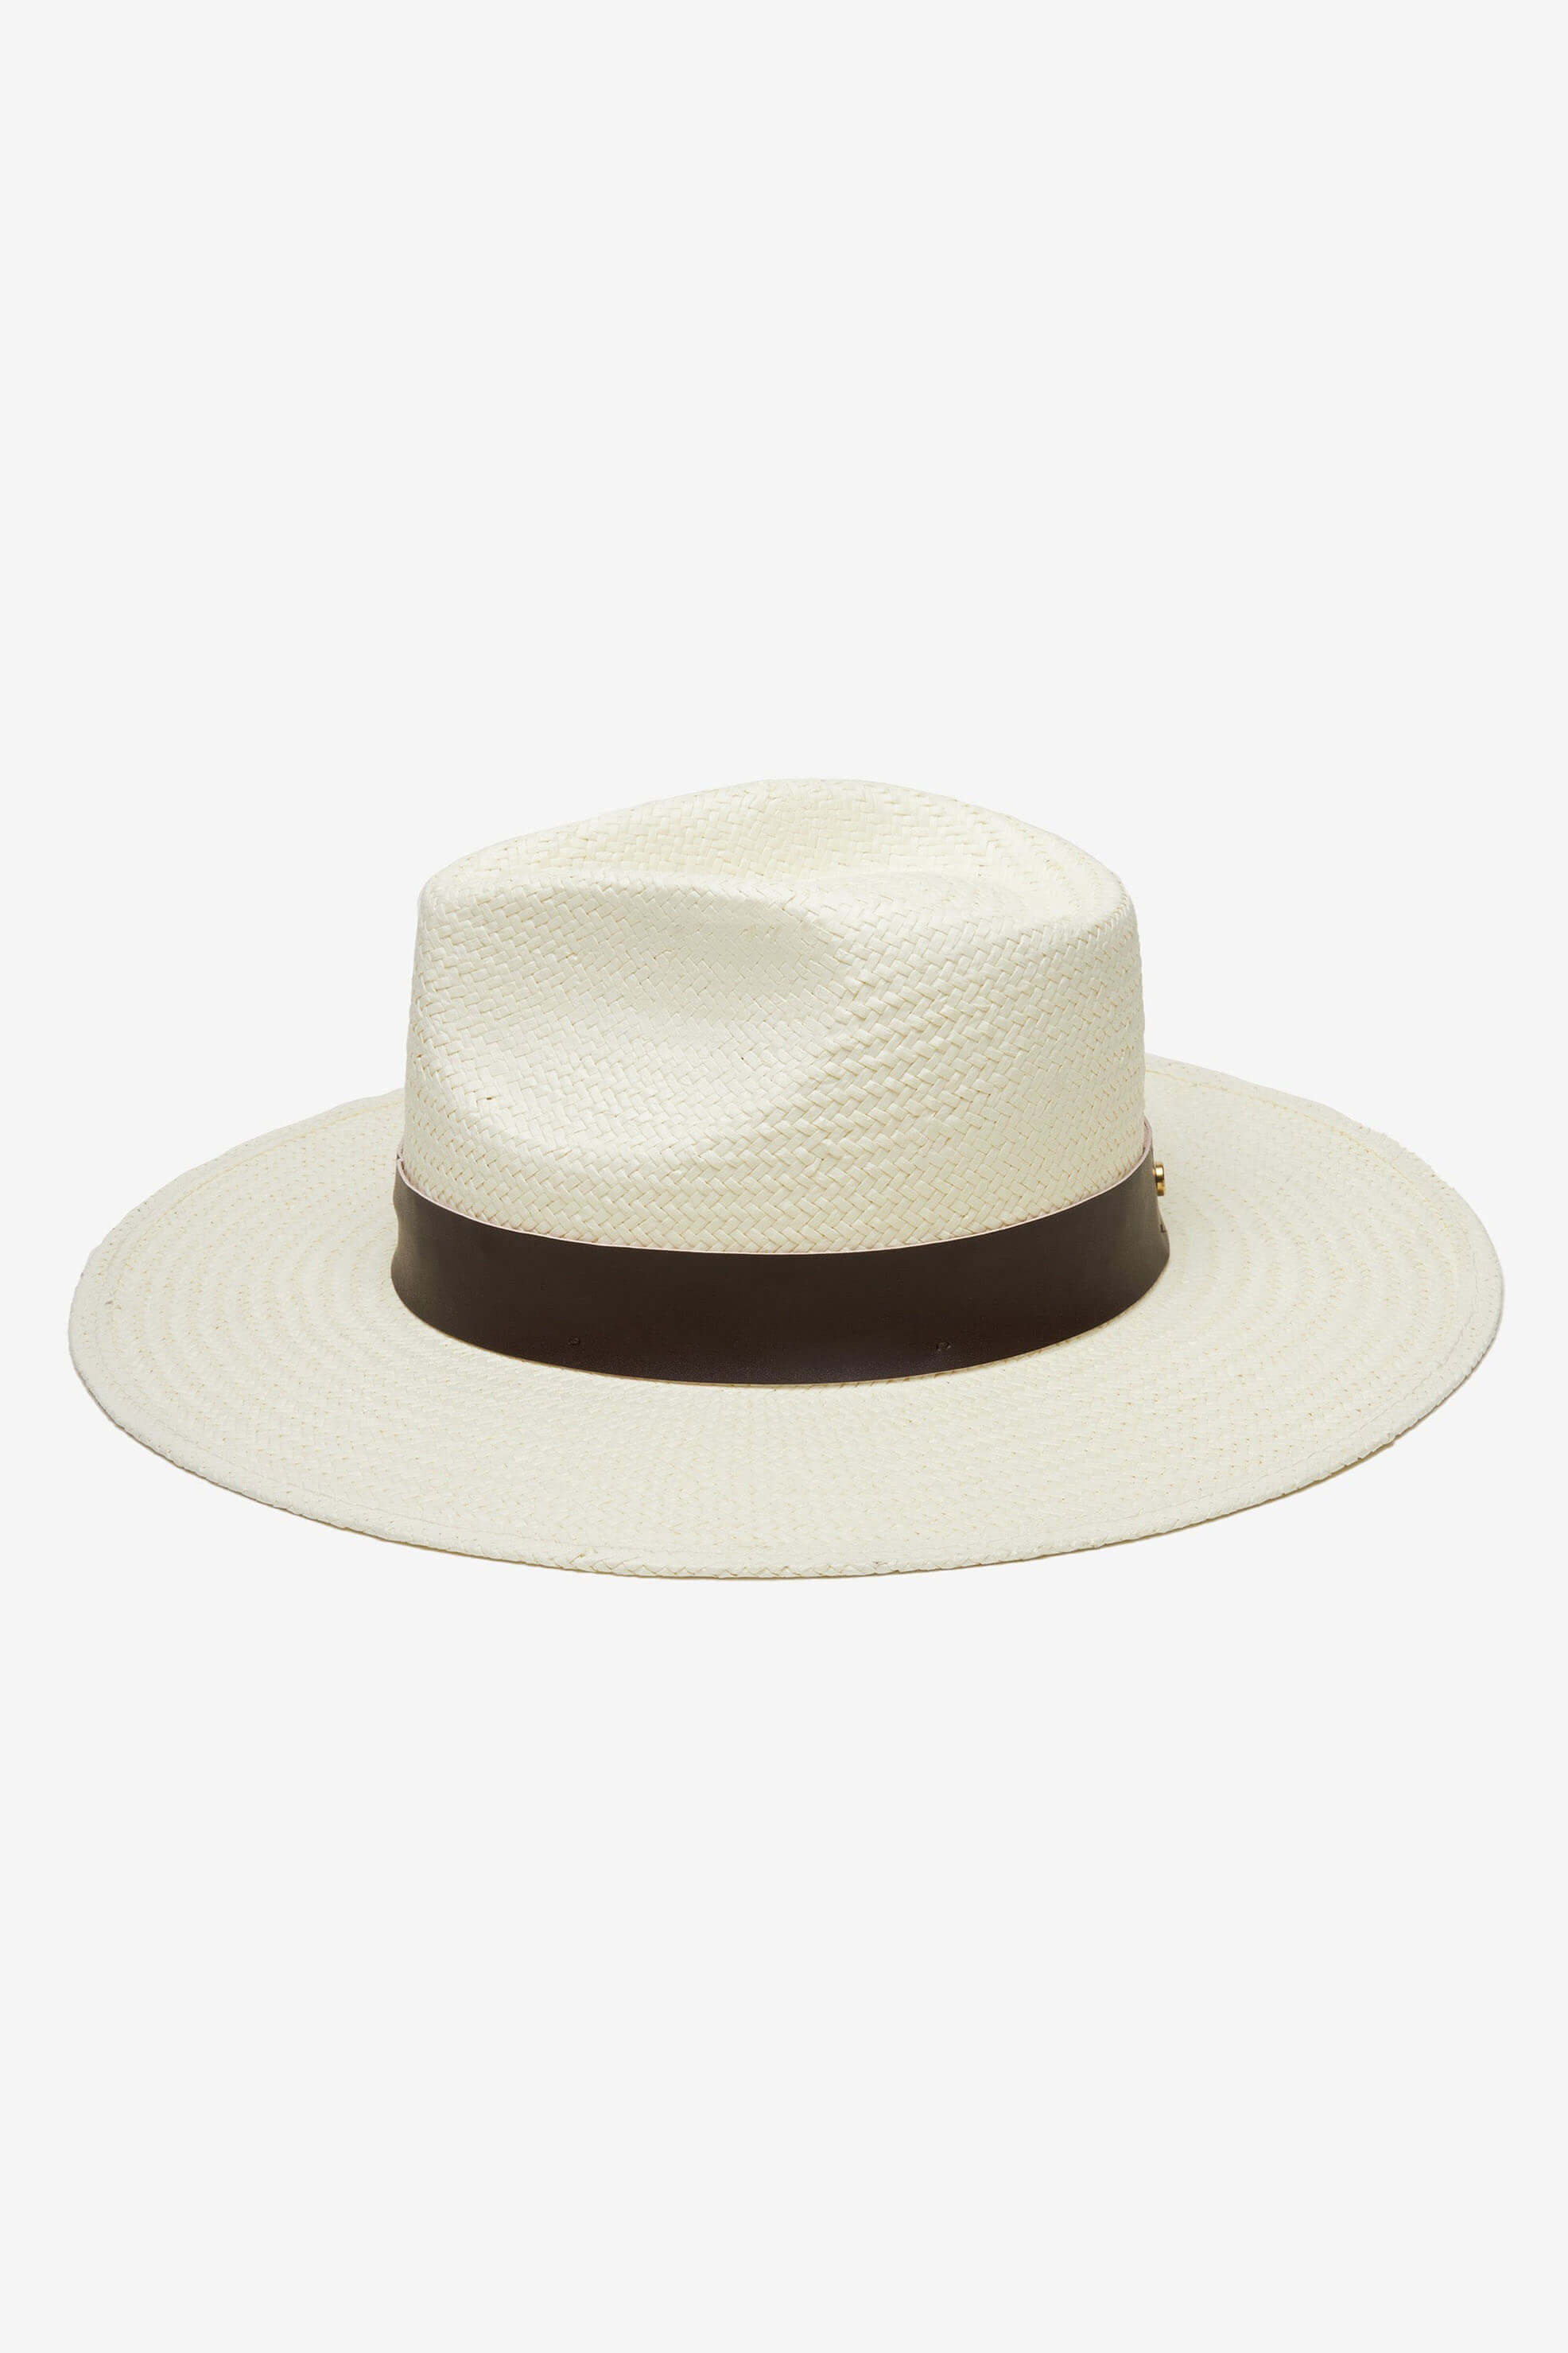 Wyeth slater hat in ivory